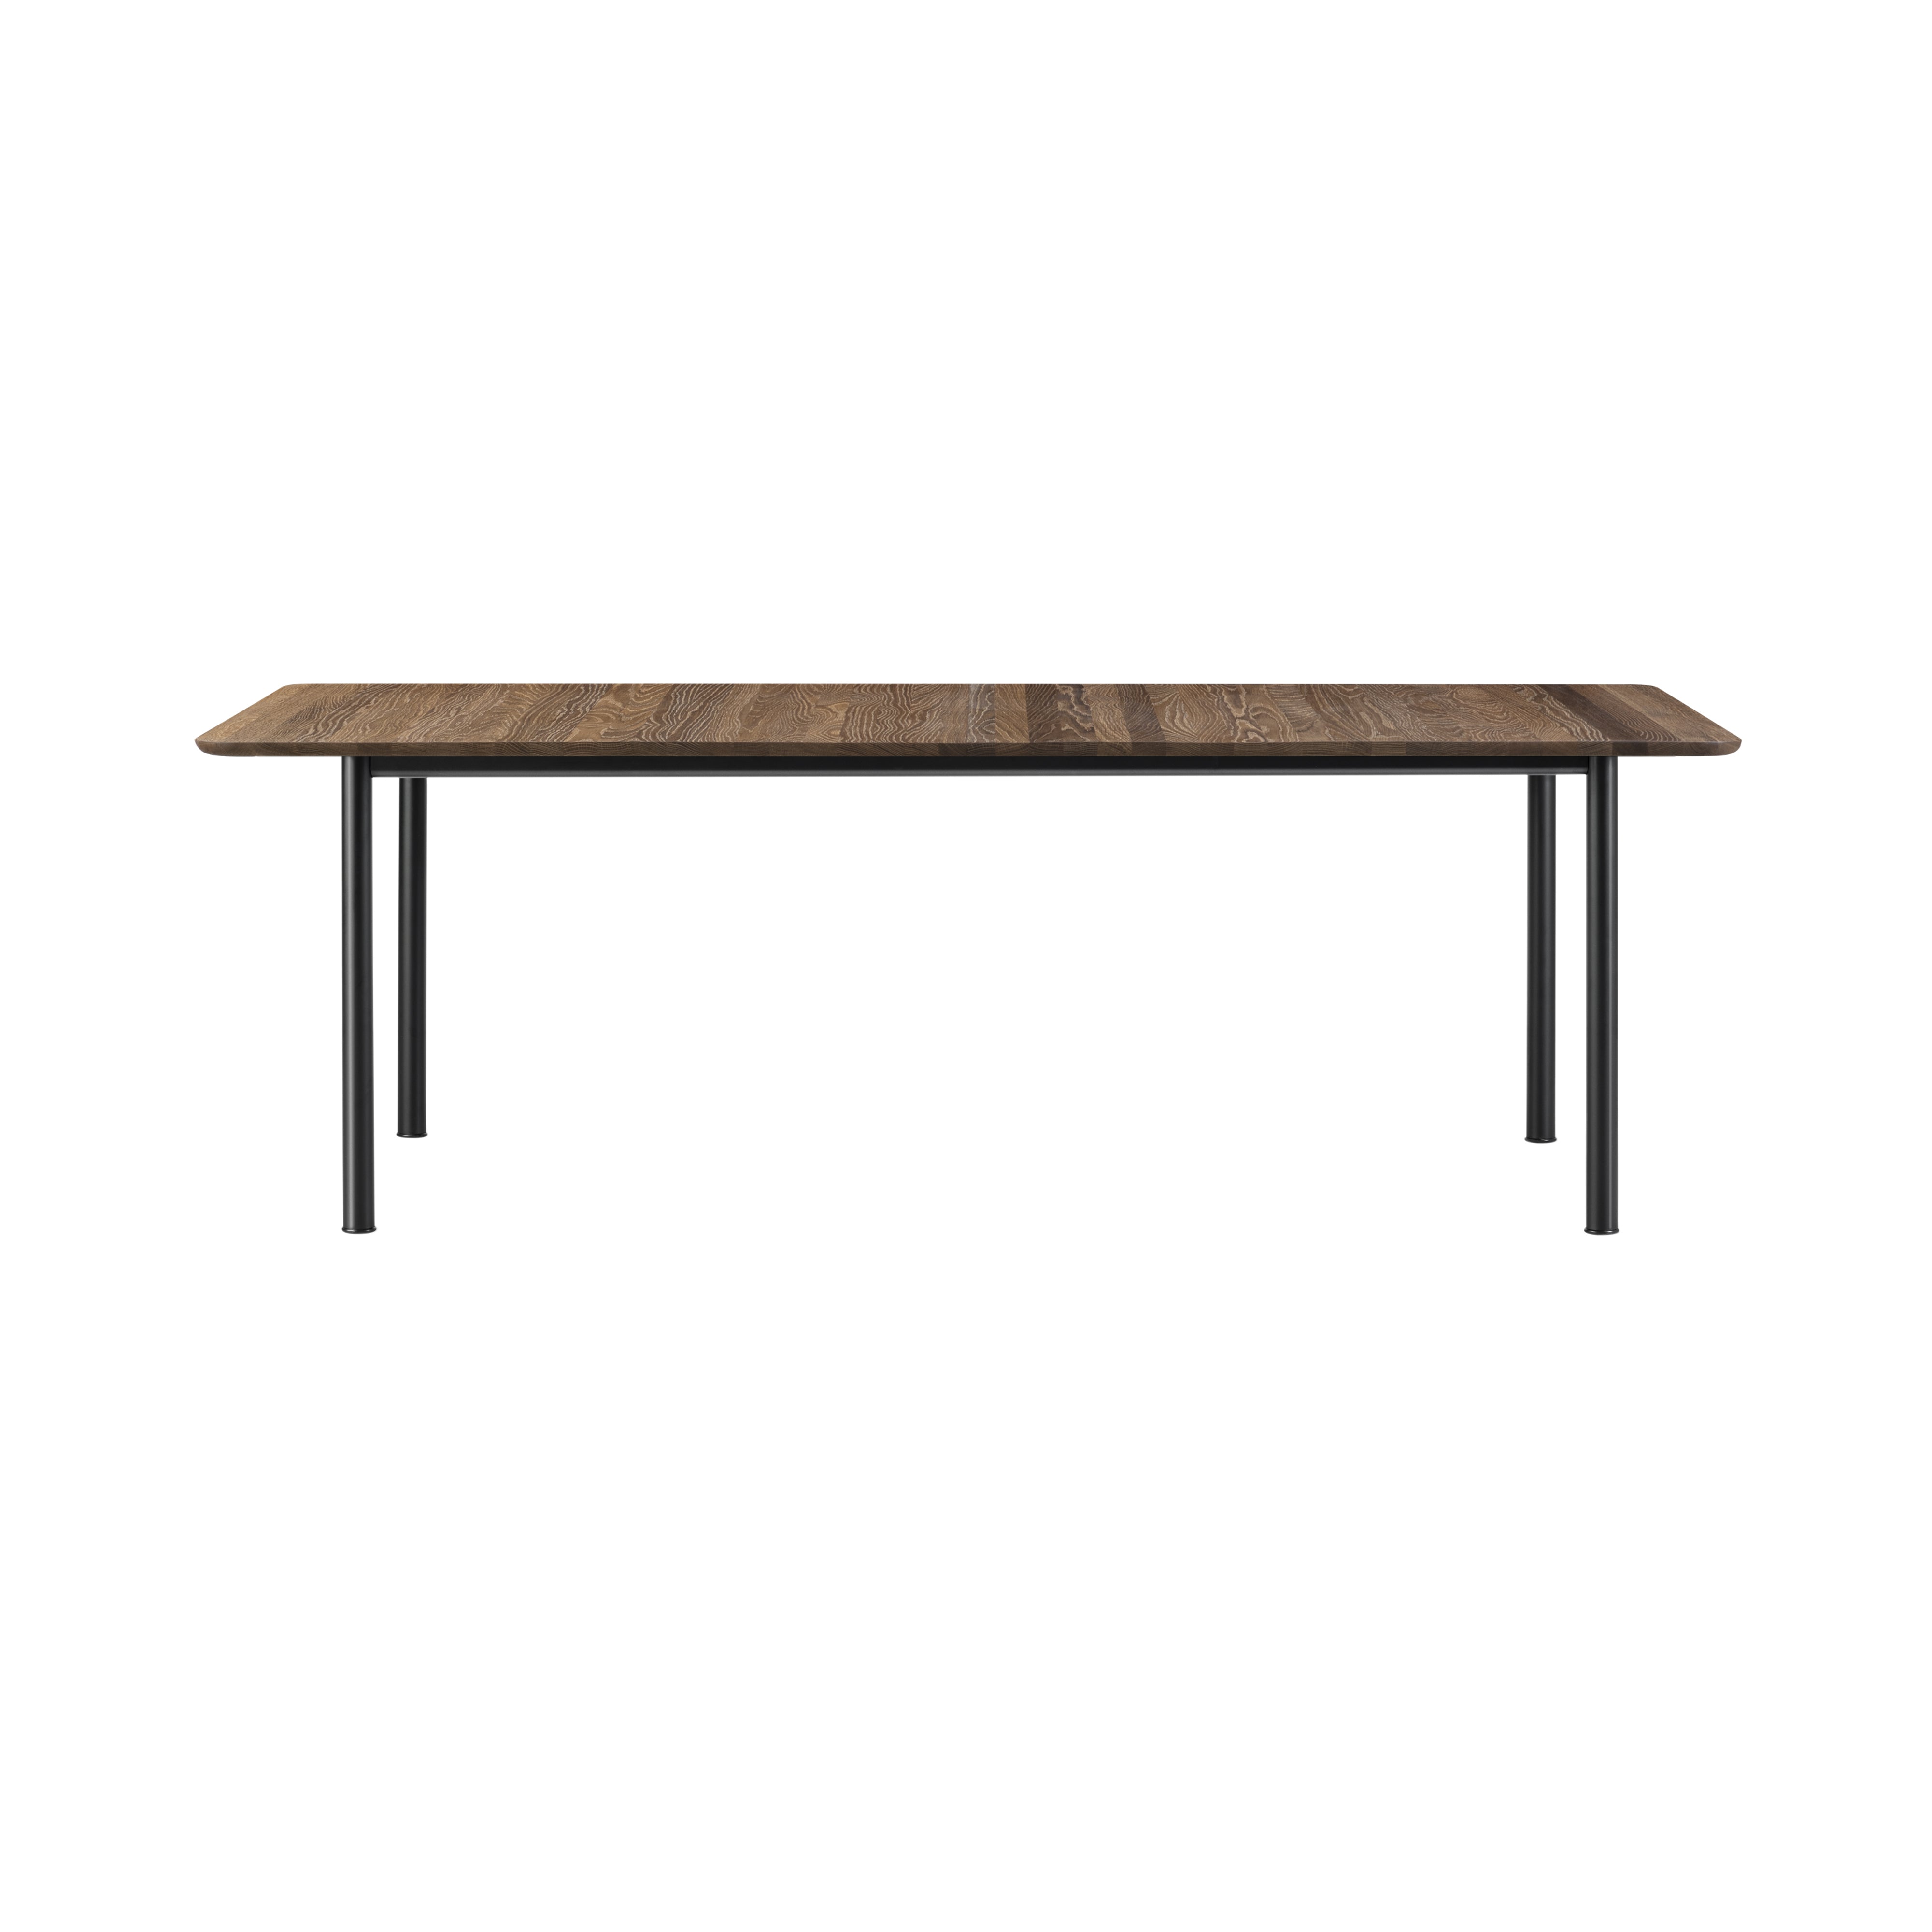 Plan Extendable Table: Smoked Oiled Oak + Black